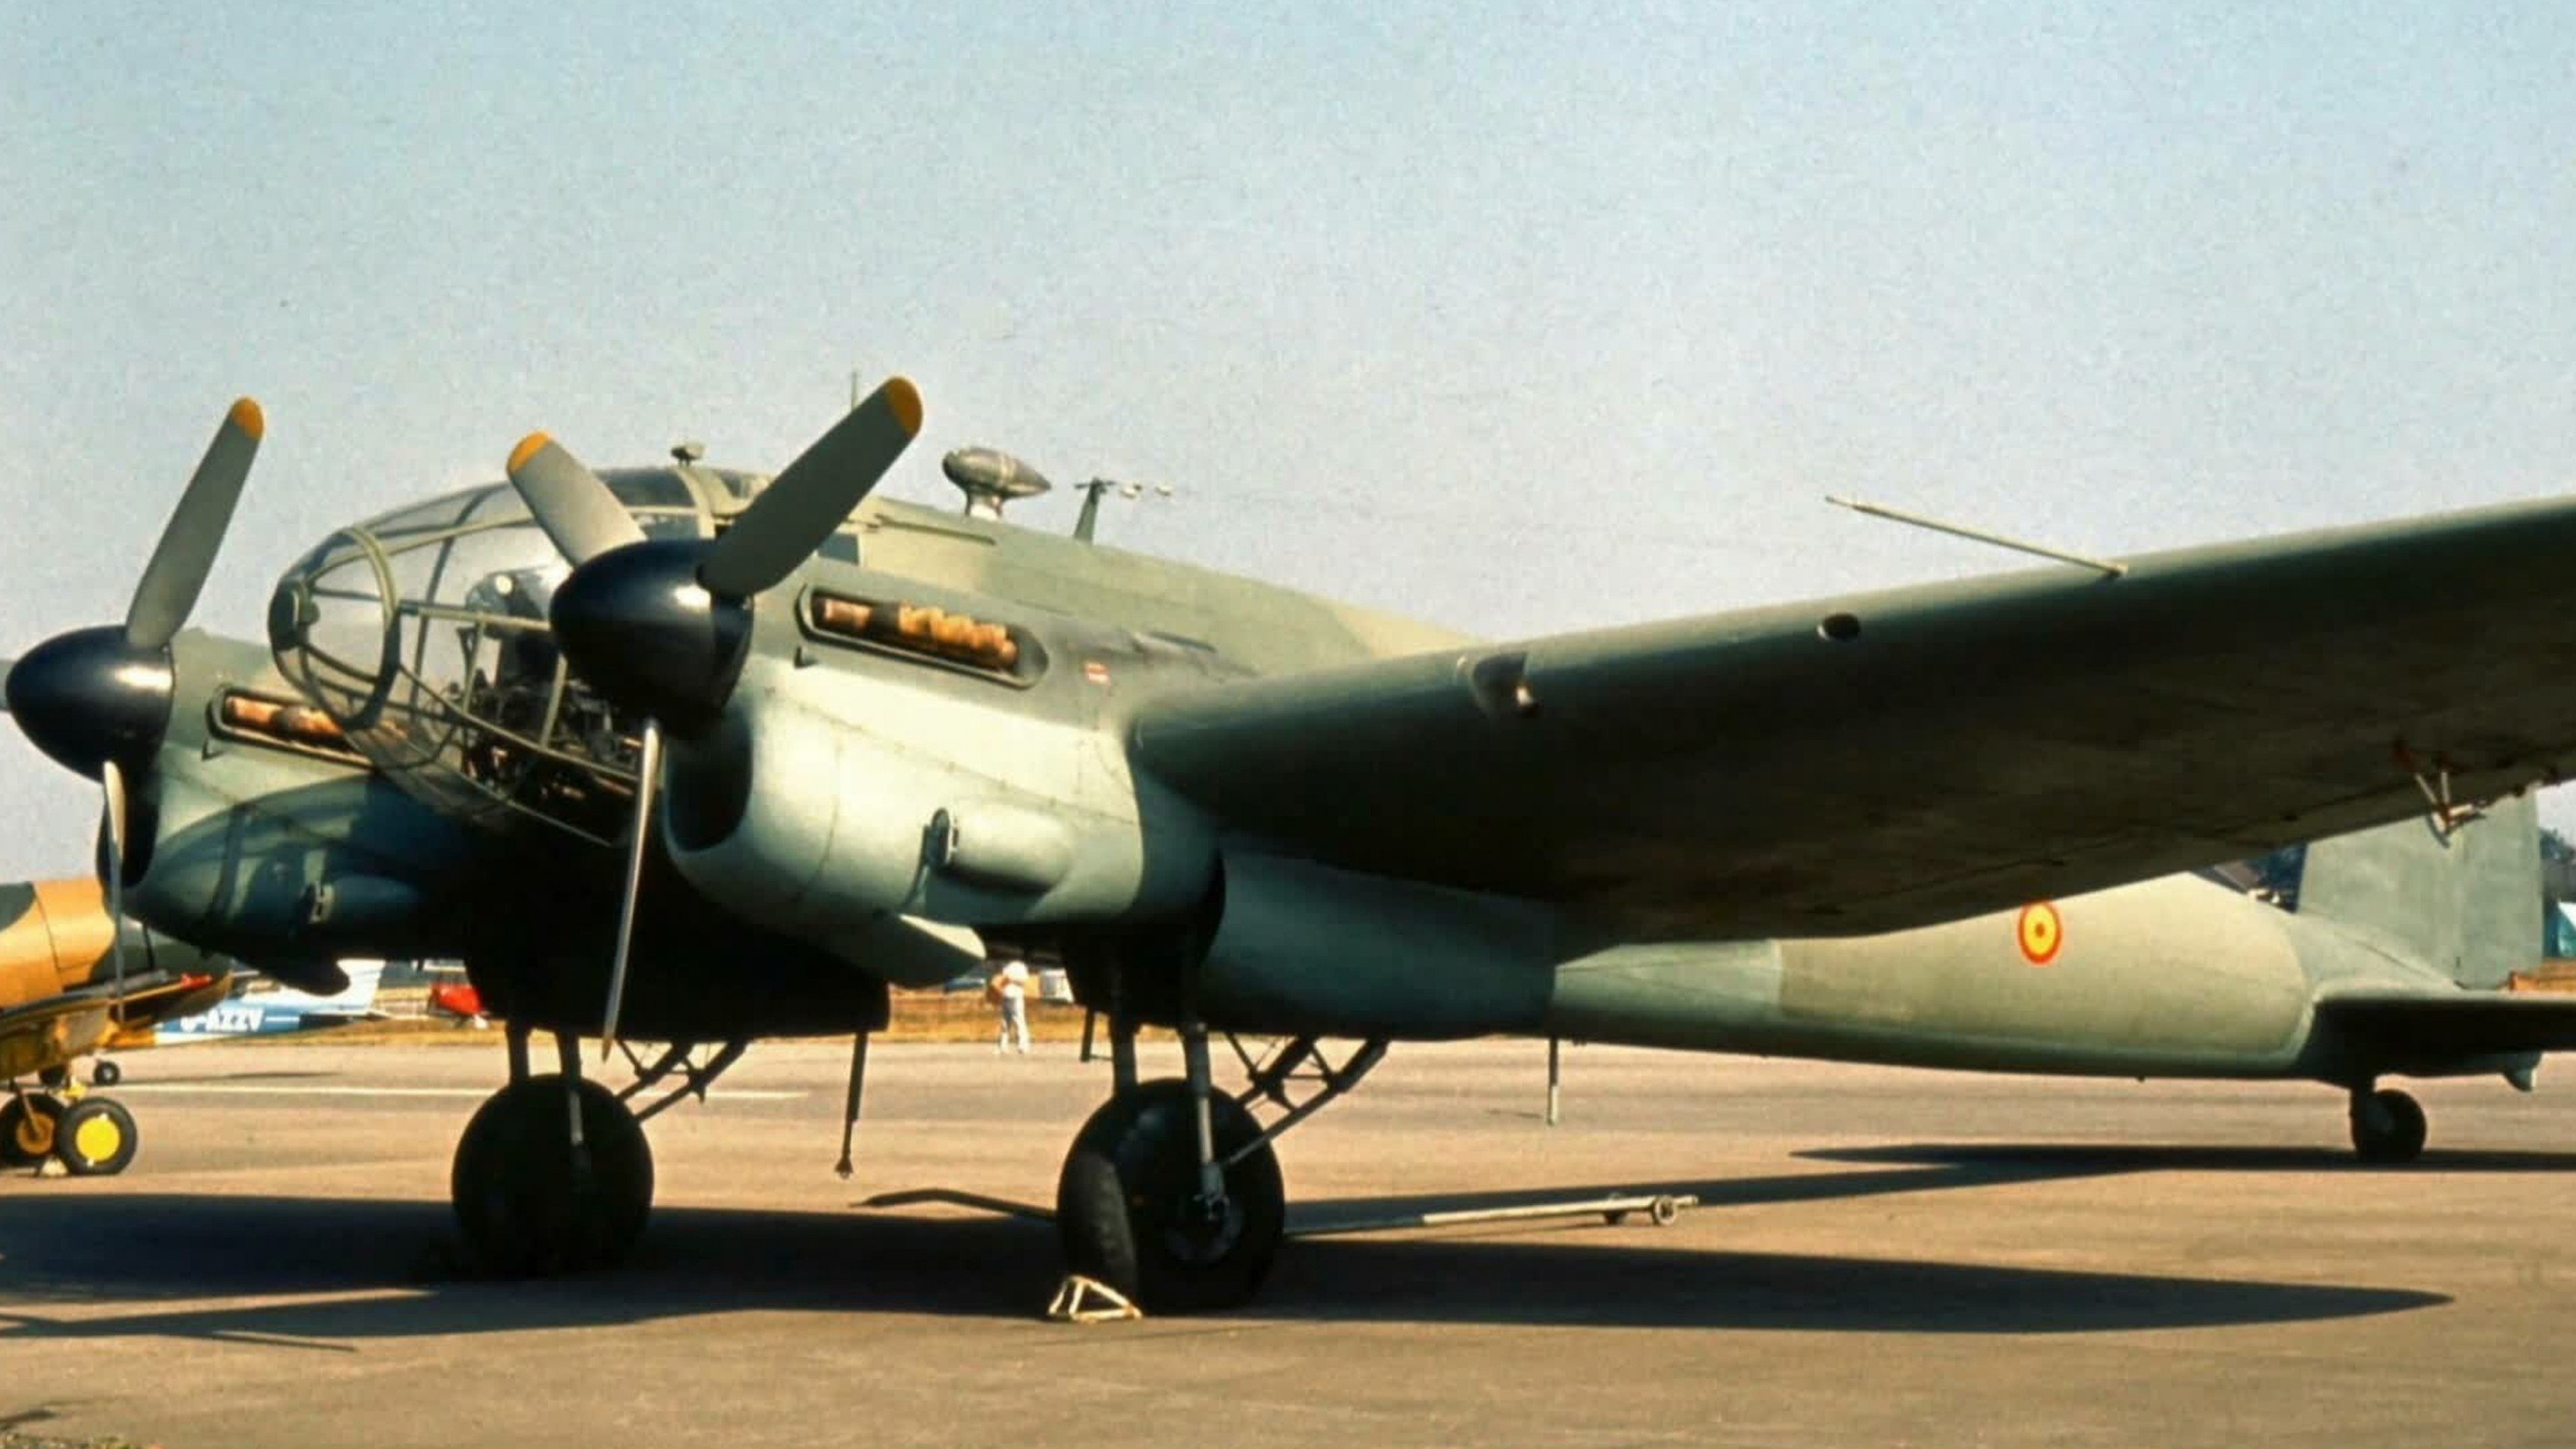 5. He-111: Germany's Frontline Bomber